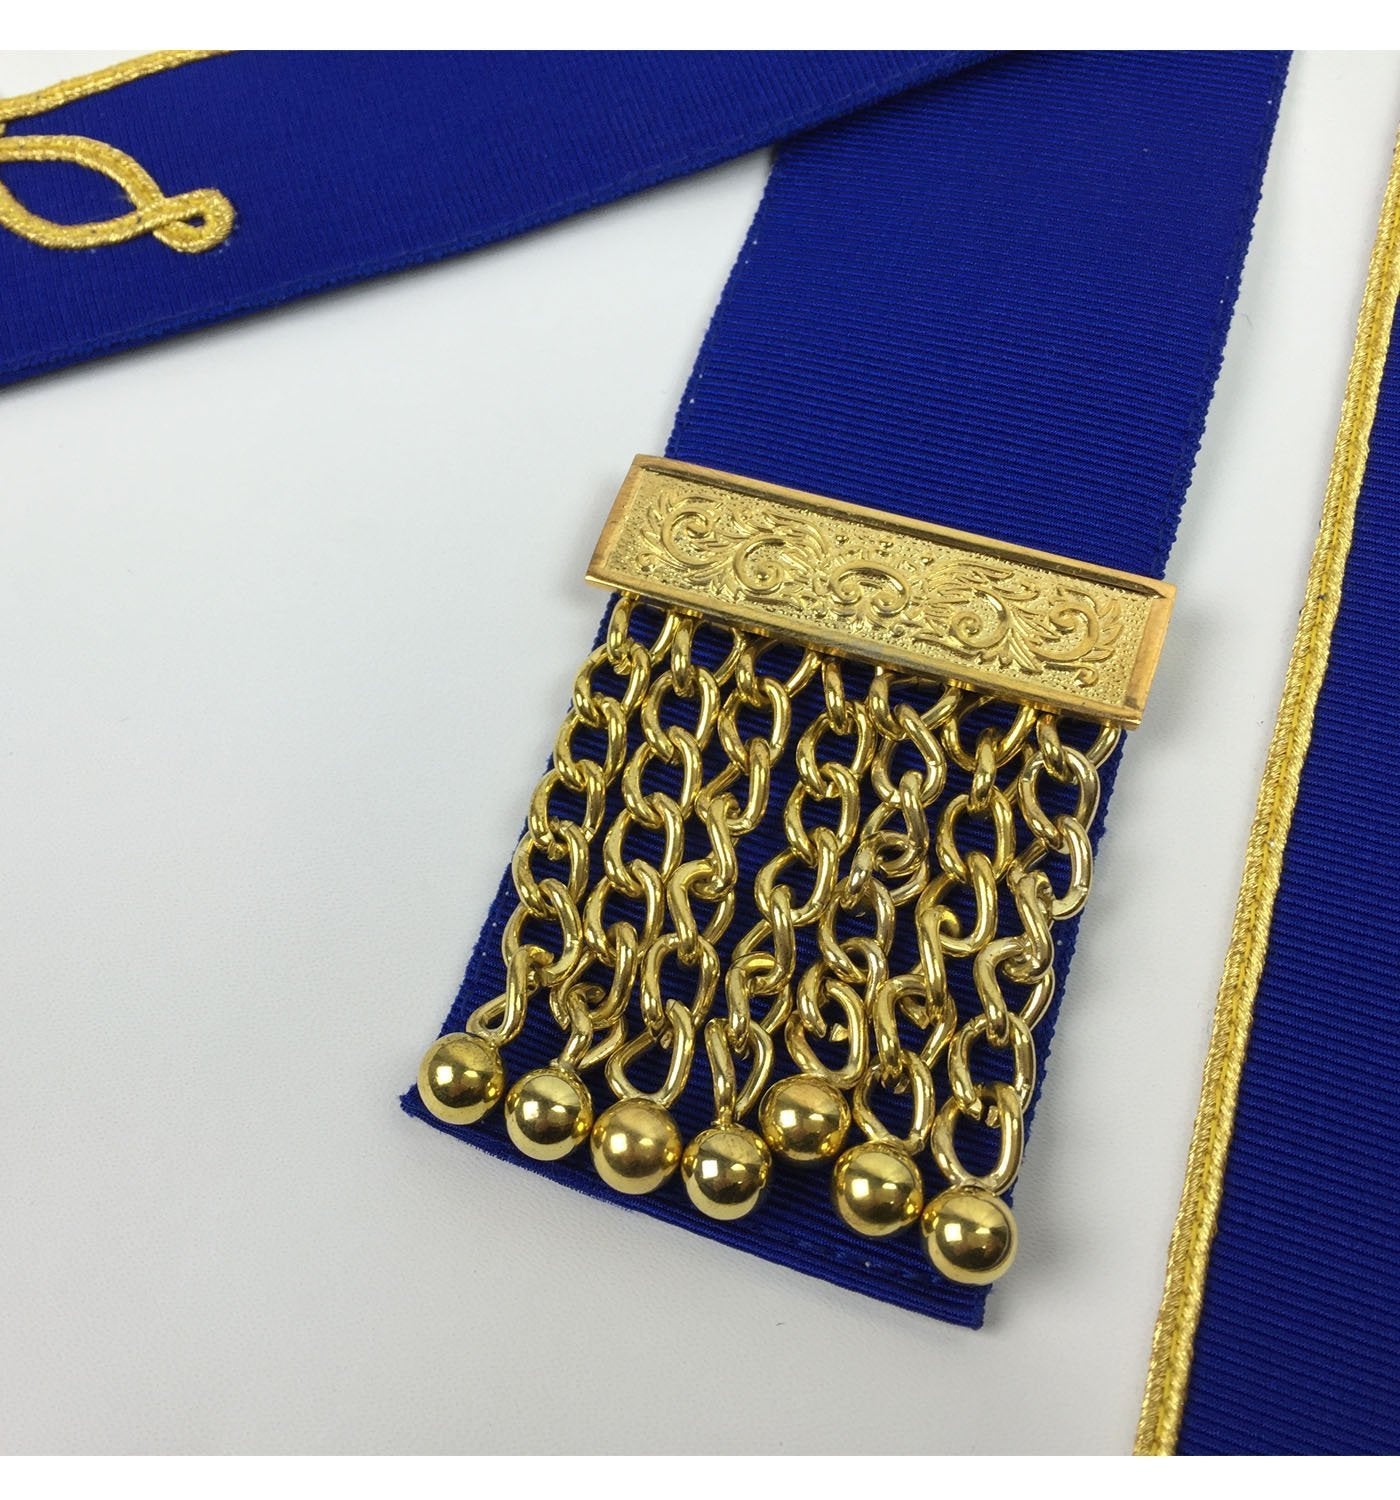 Provincial Officers Craft English Regulation Regalia Set - Apron, Collar, Gloves - Bricks Masons